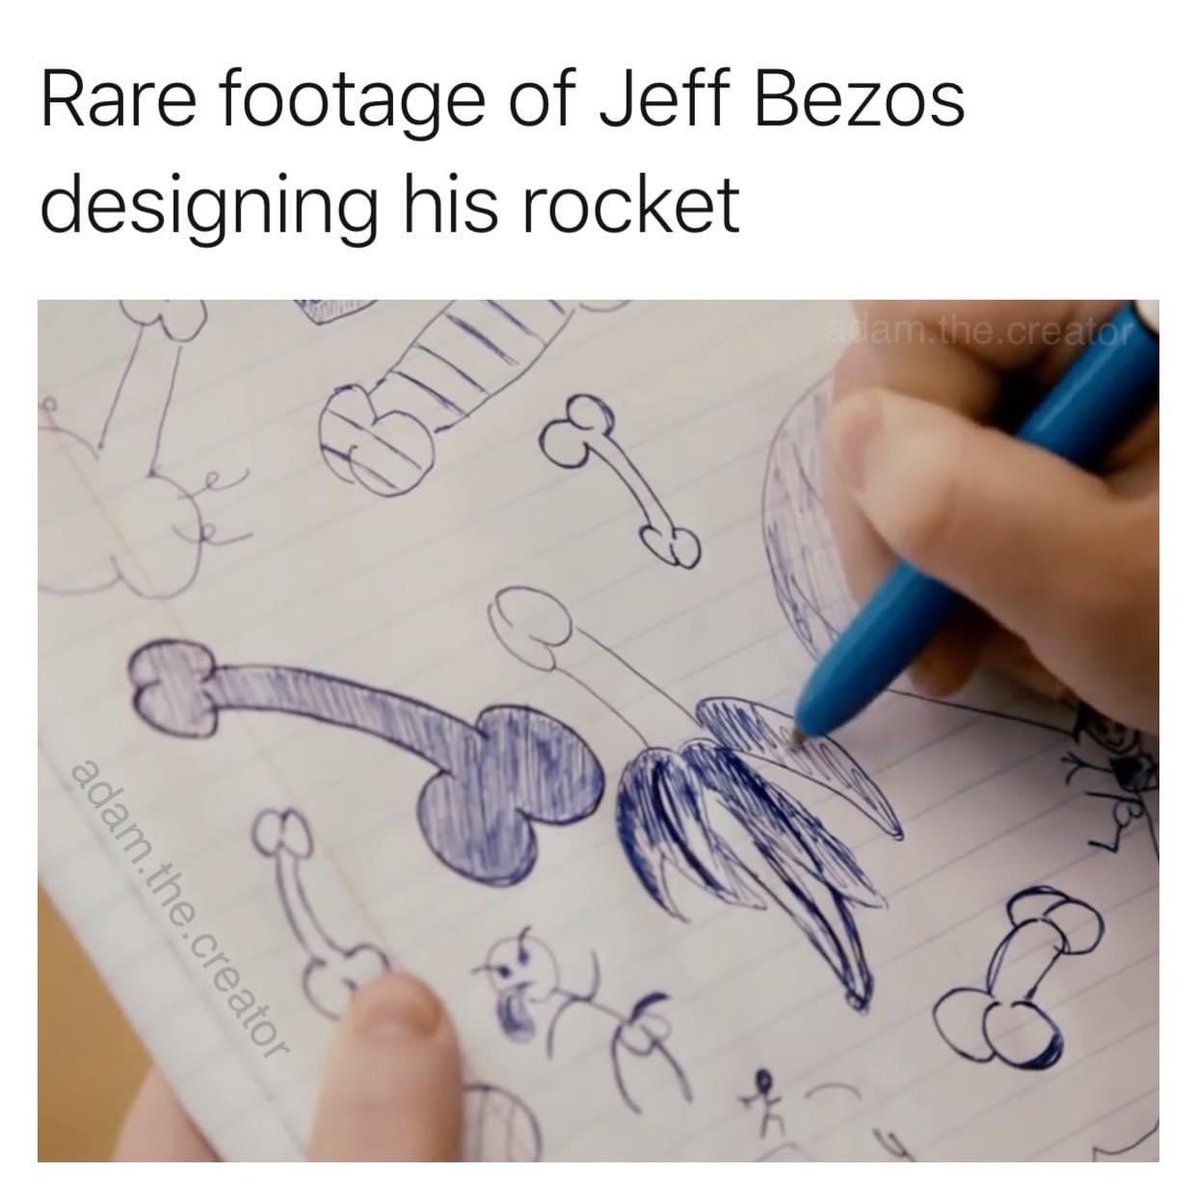 dank memes - Jeff Bezos - Rare footage of Jeff Bezos designing his rocket Beam.the.creator Je adam.the.creator